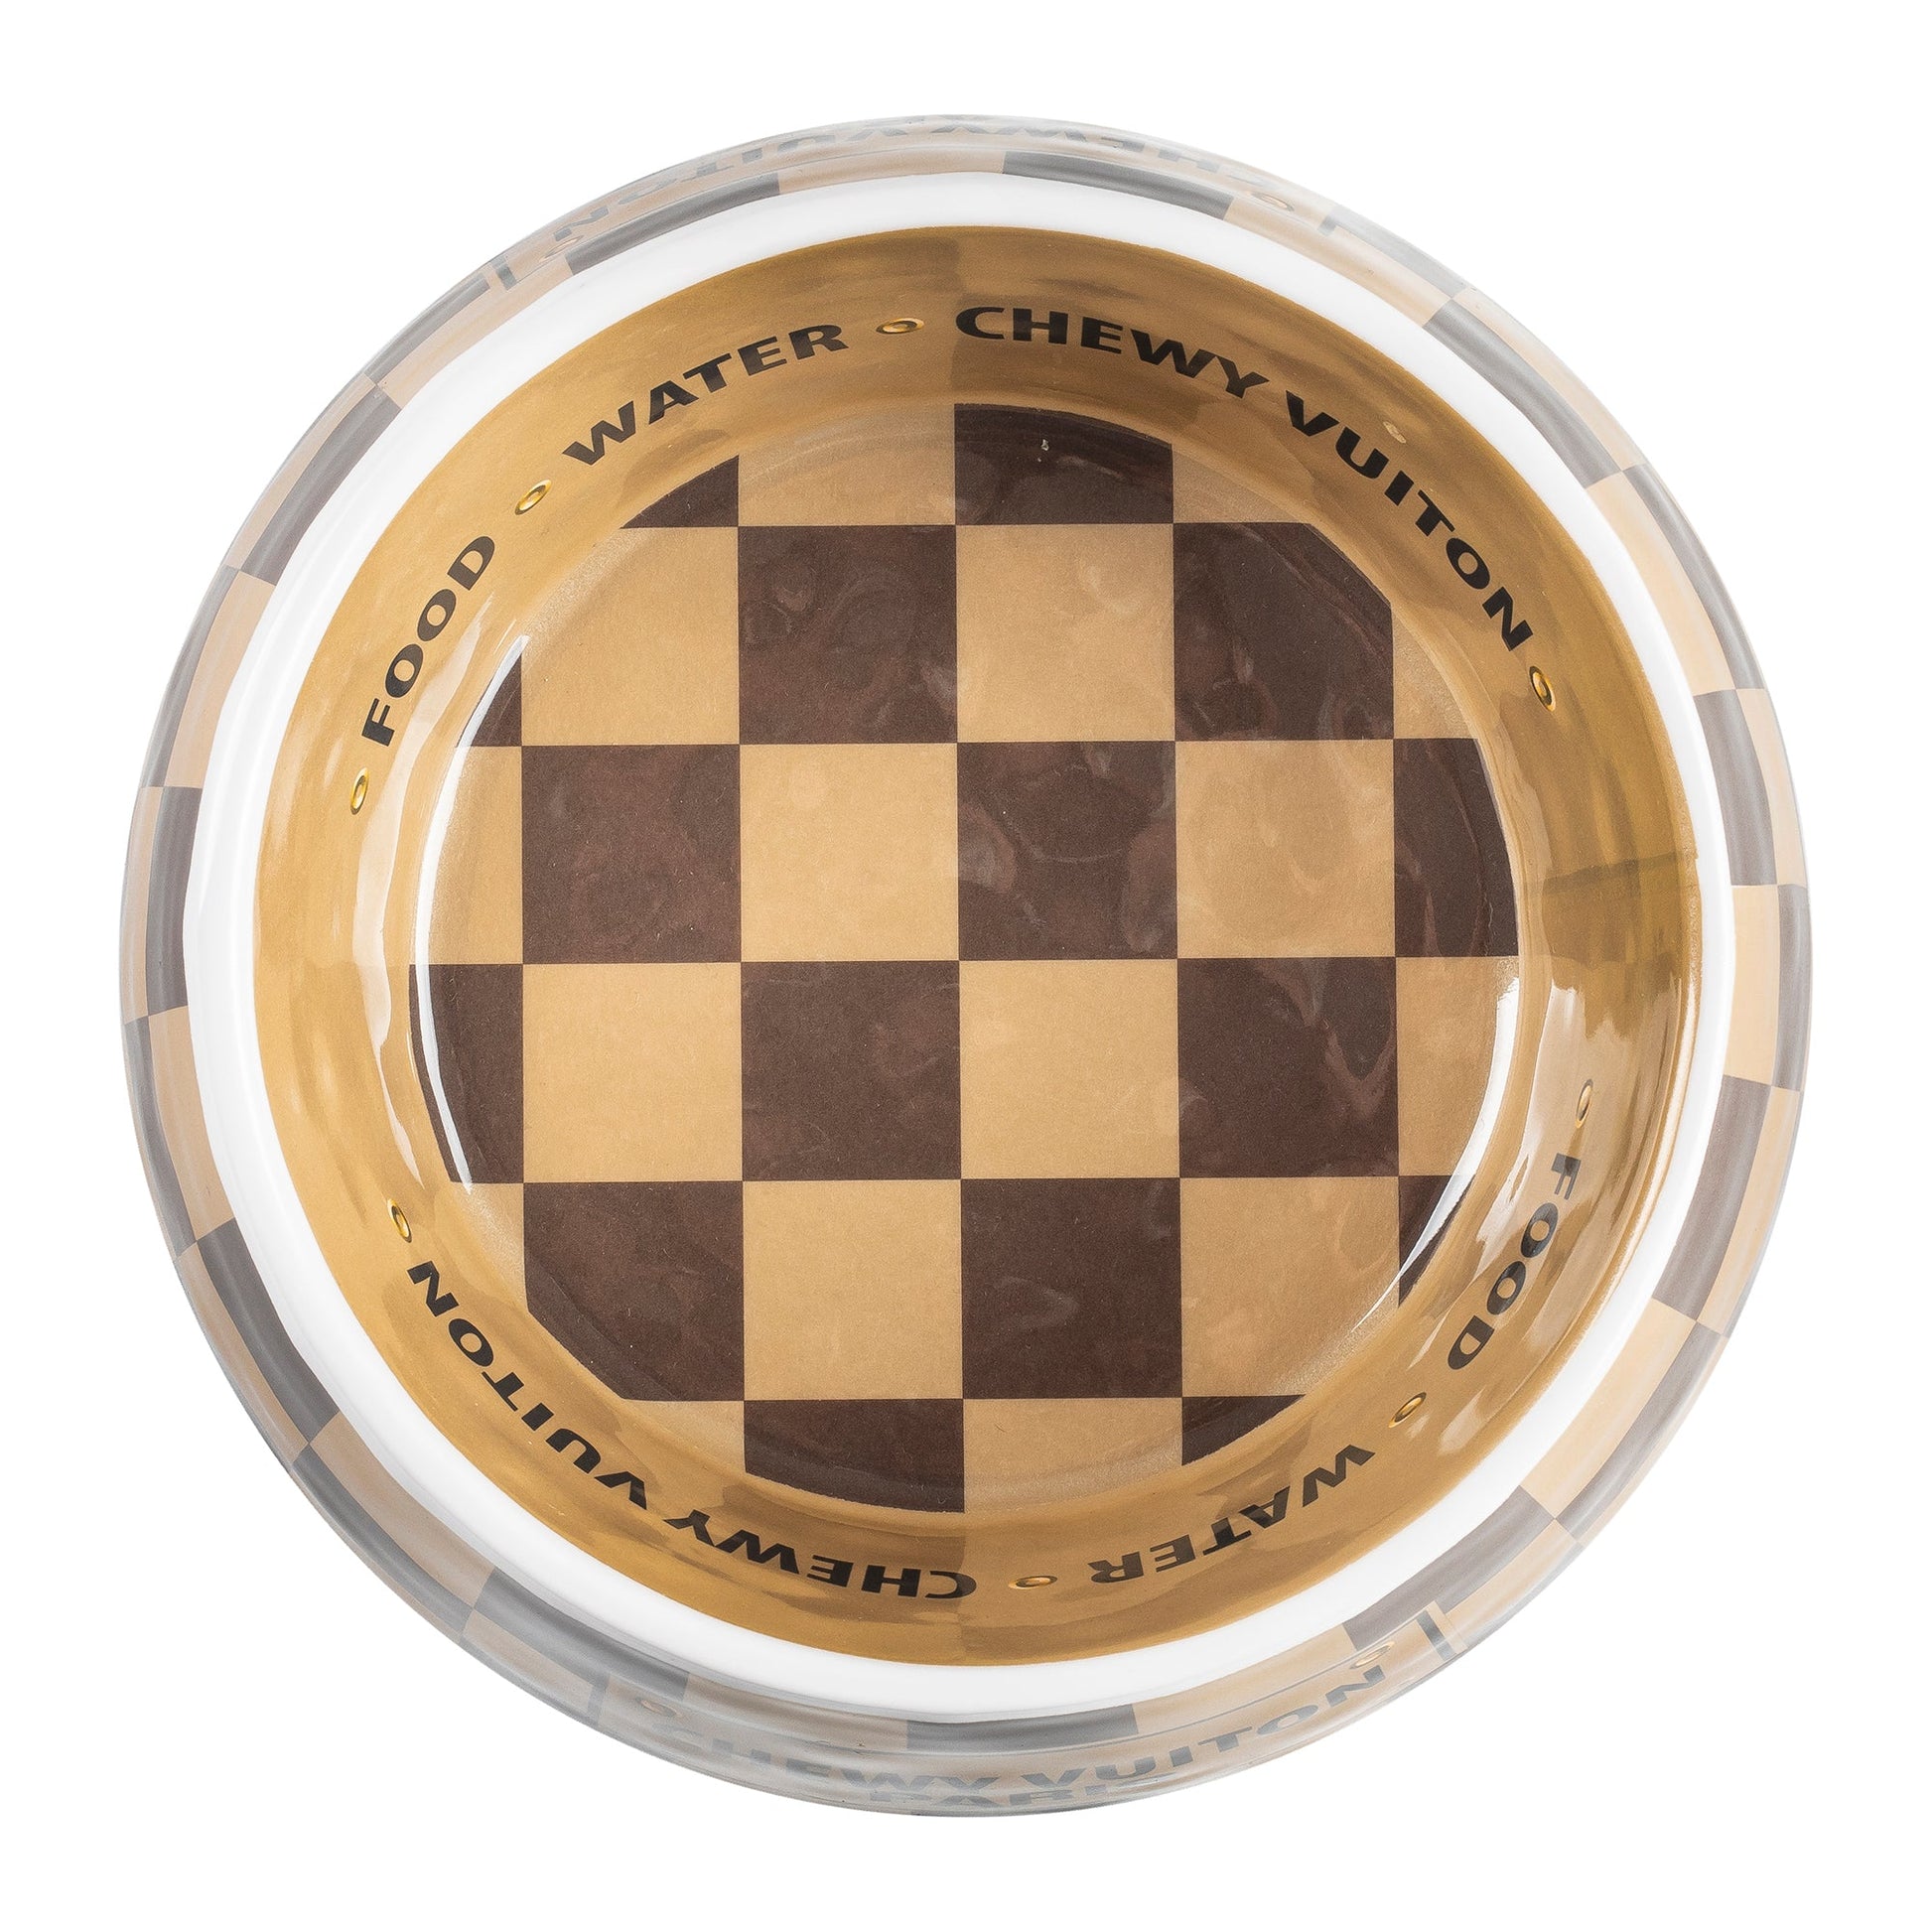 Checker Chewy Vuiton Bowl - 3 Sizes – Petshion Boutique